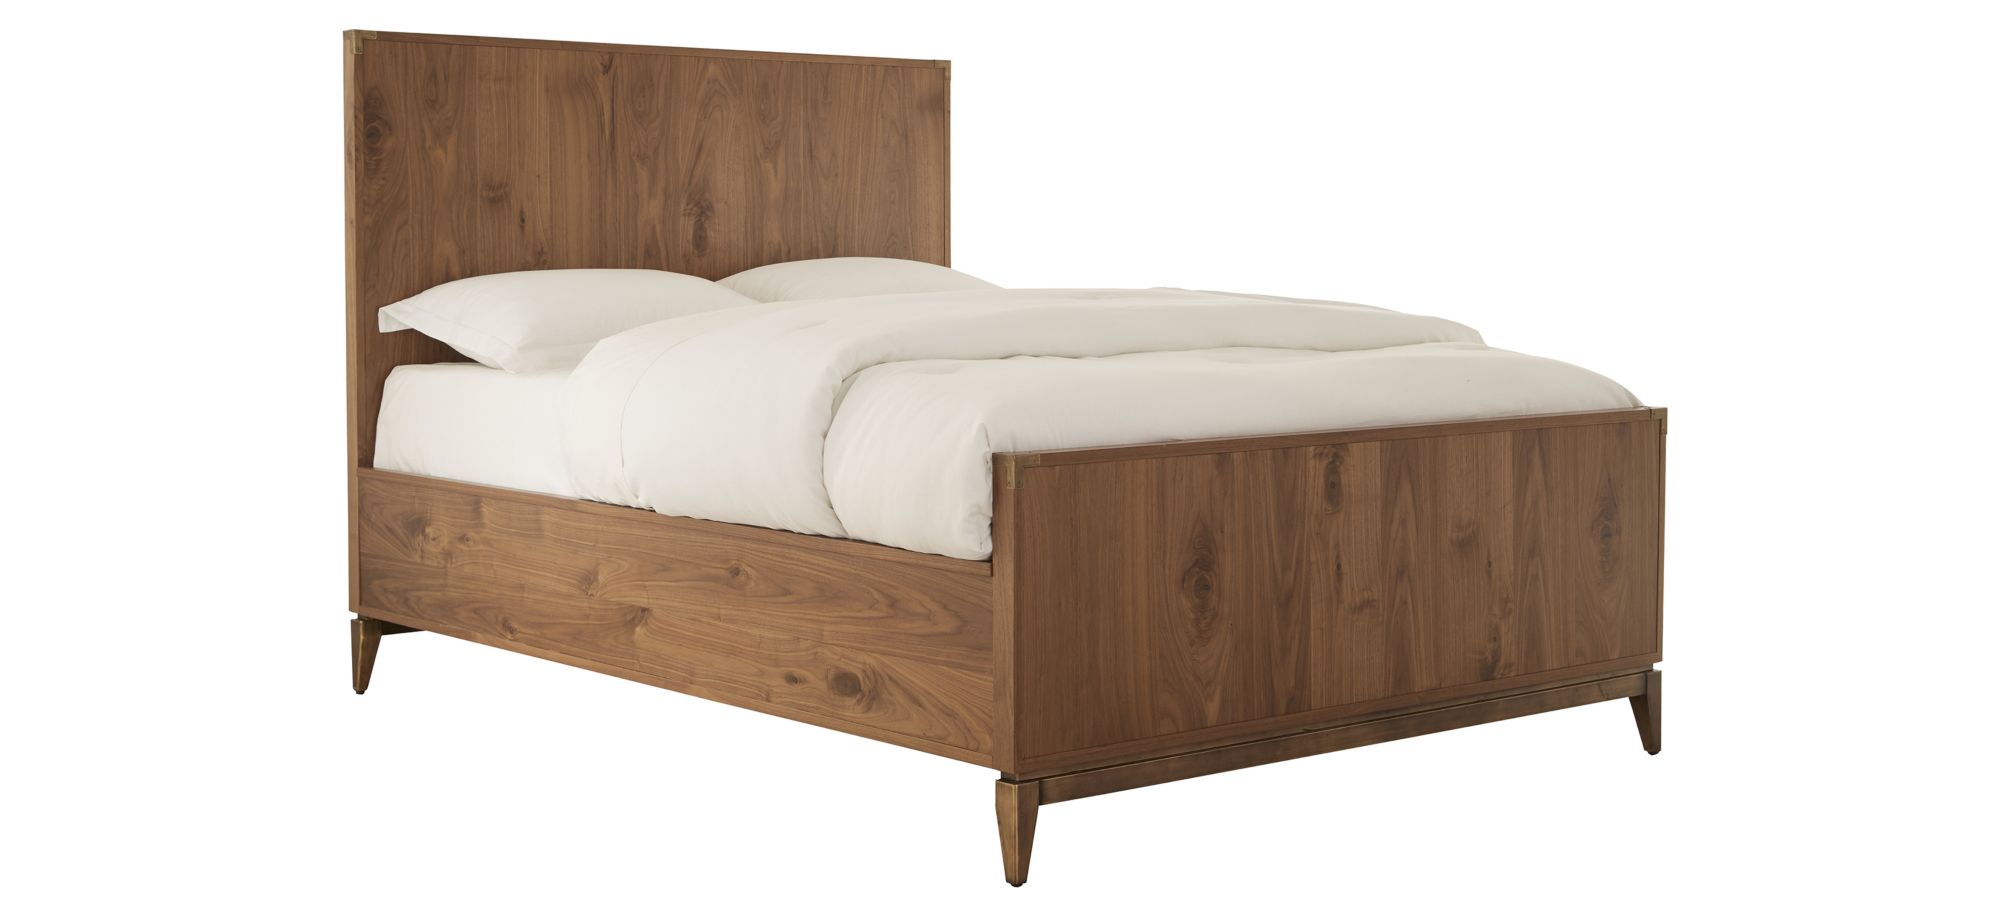 Adler Panel Bed in Natural Walnut by Bellanest